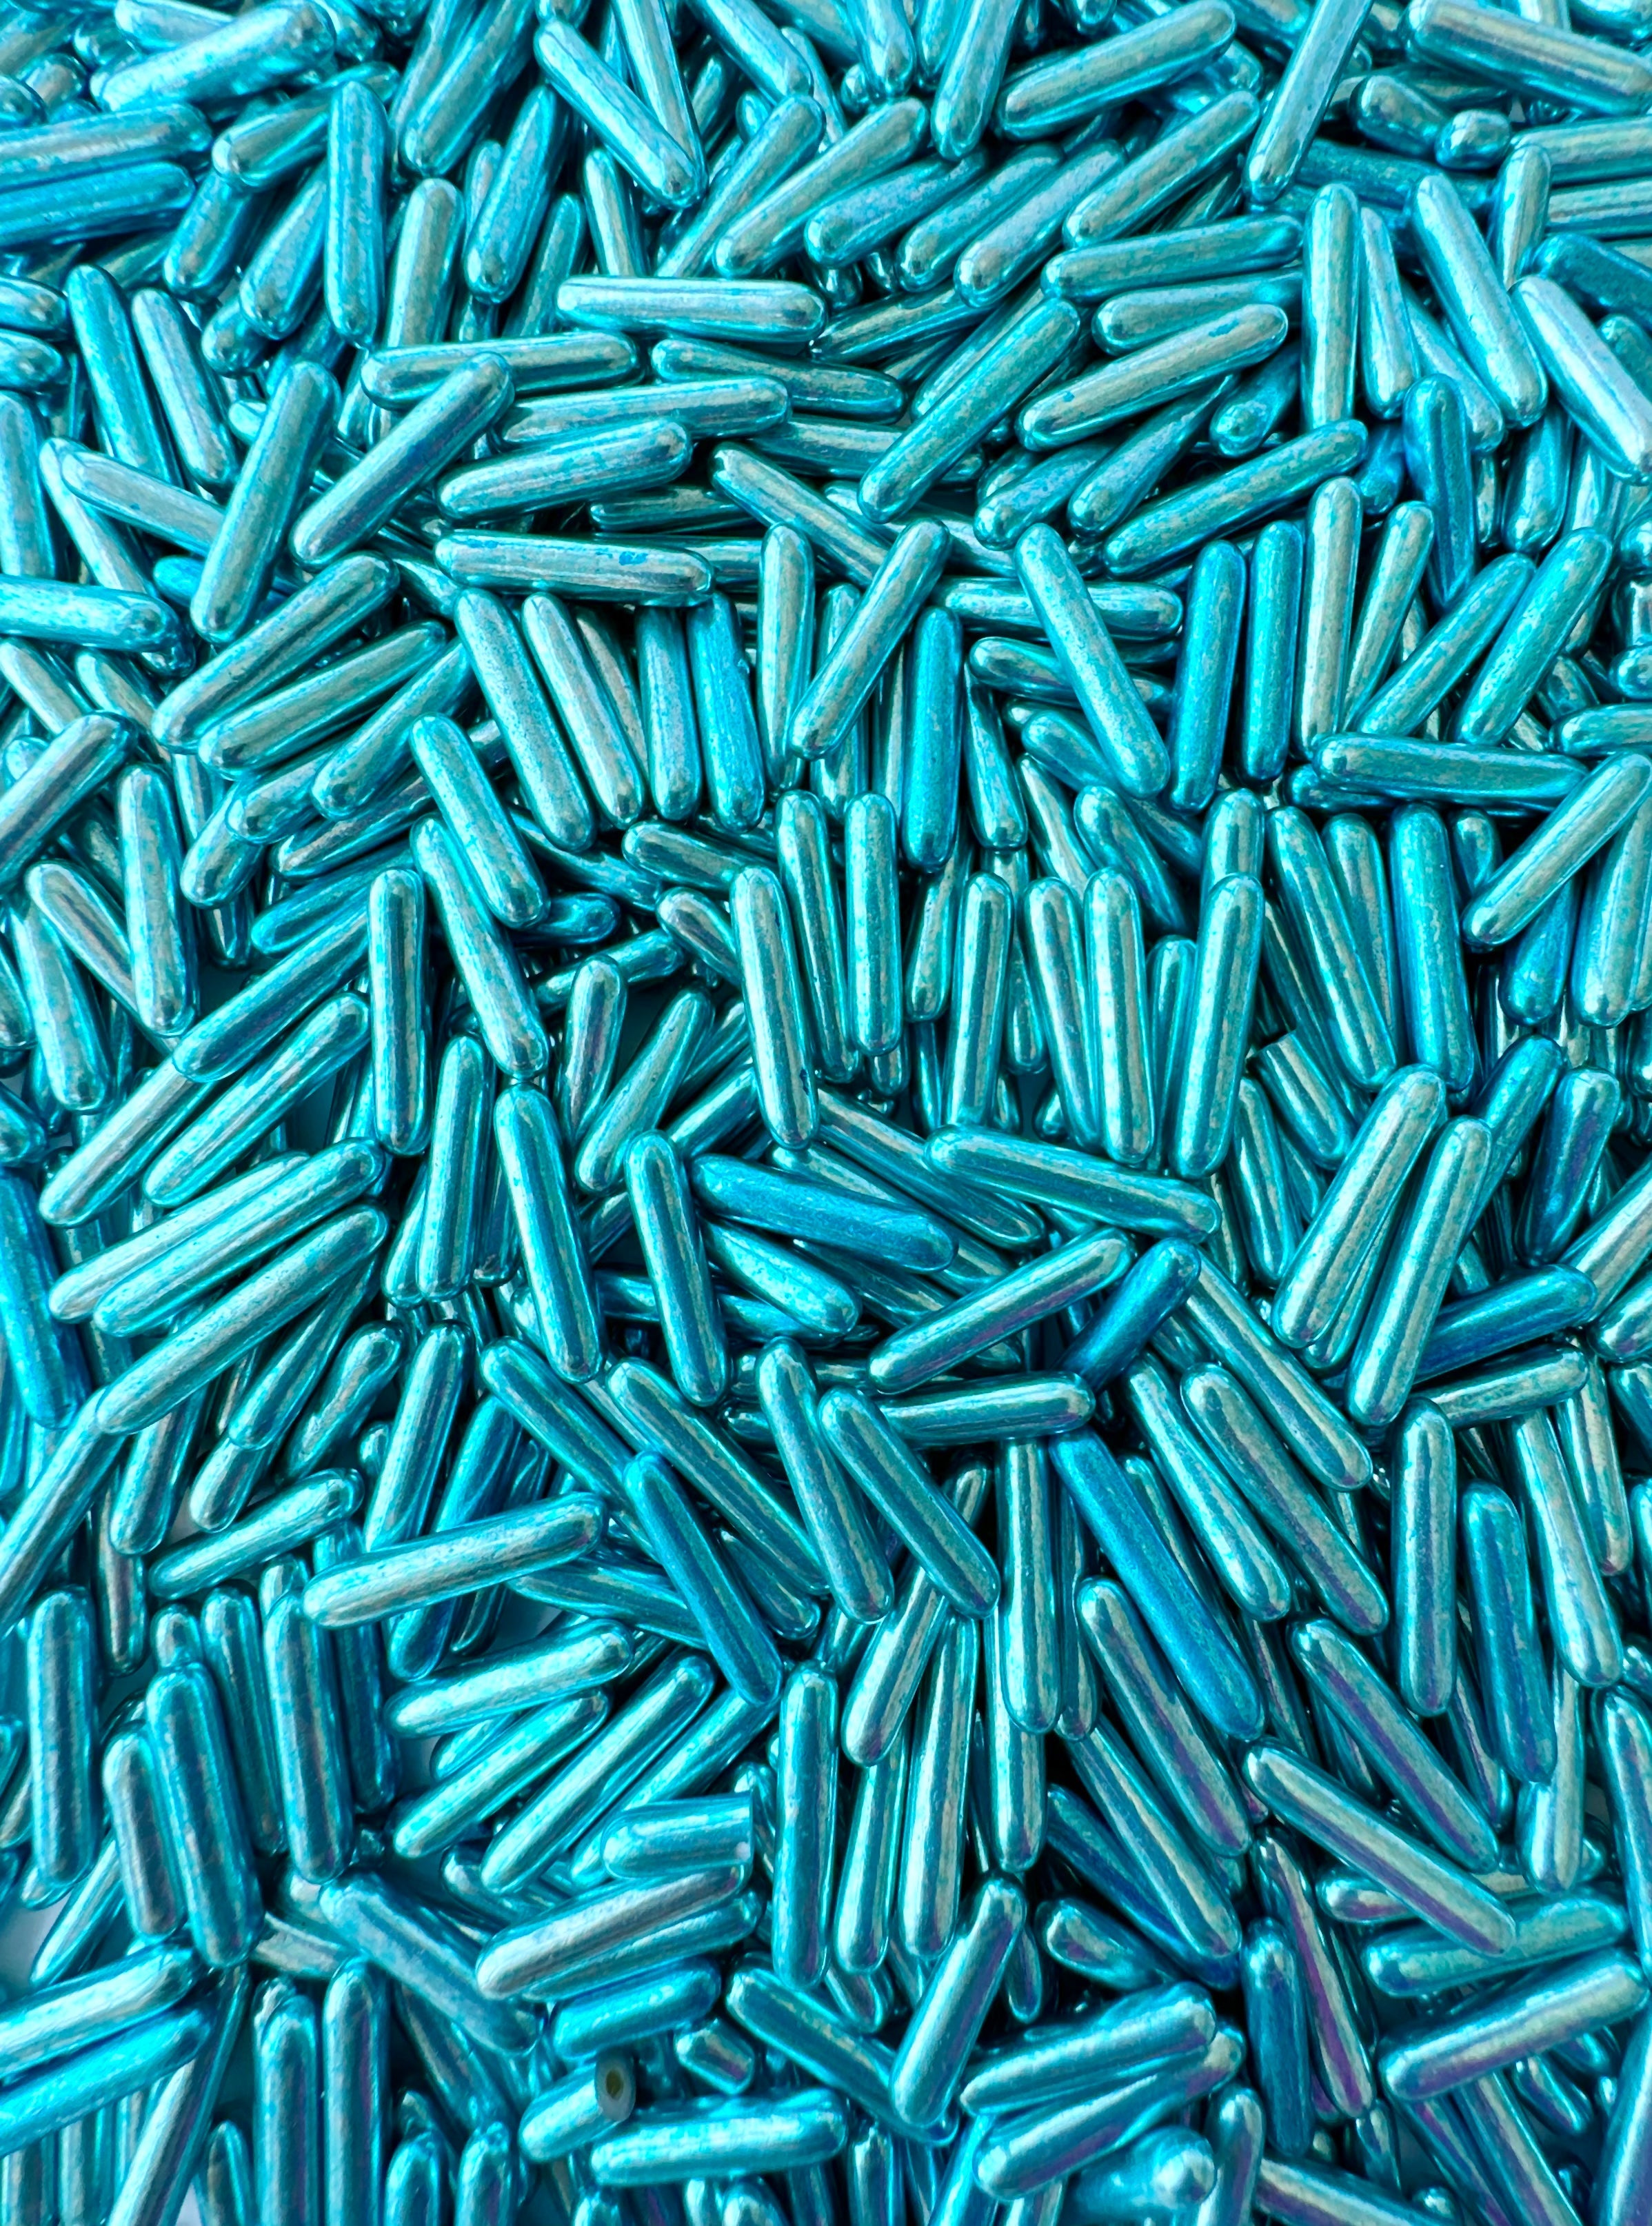 Turquoise Metallic Rods - US